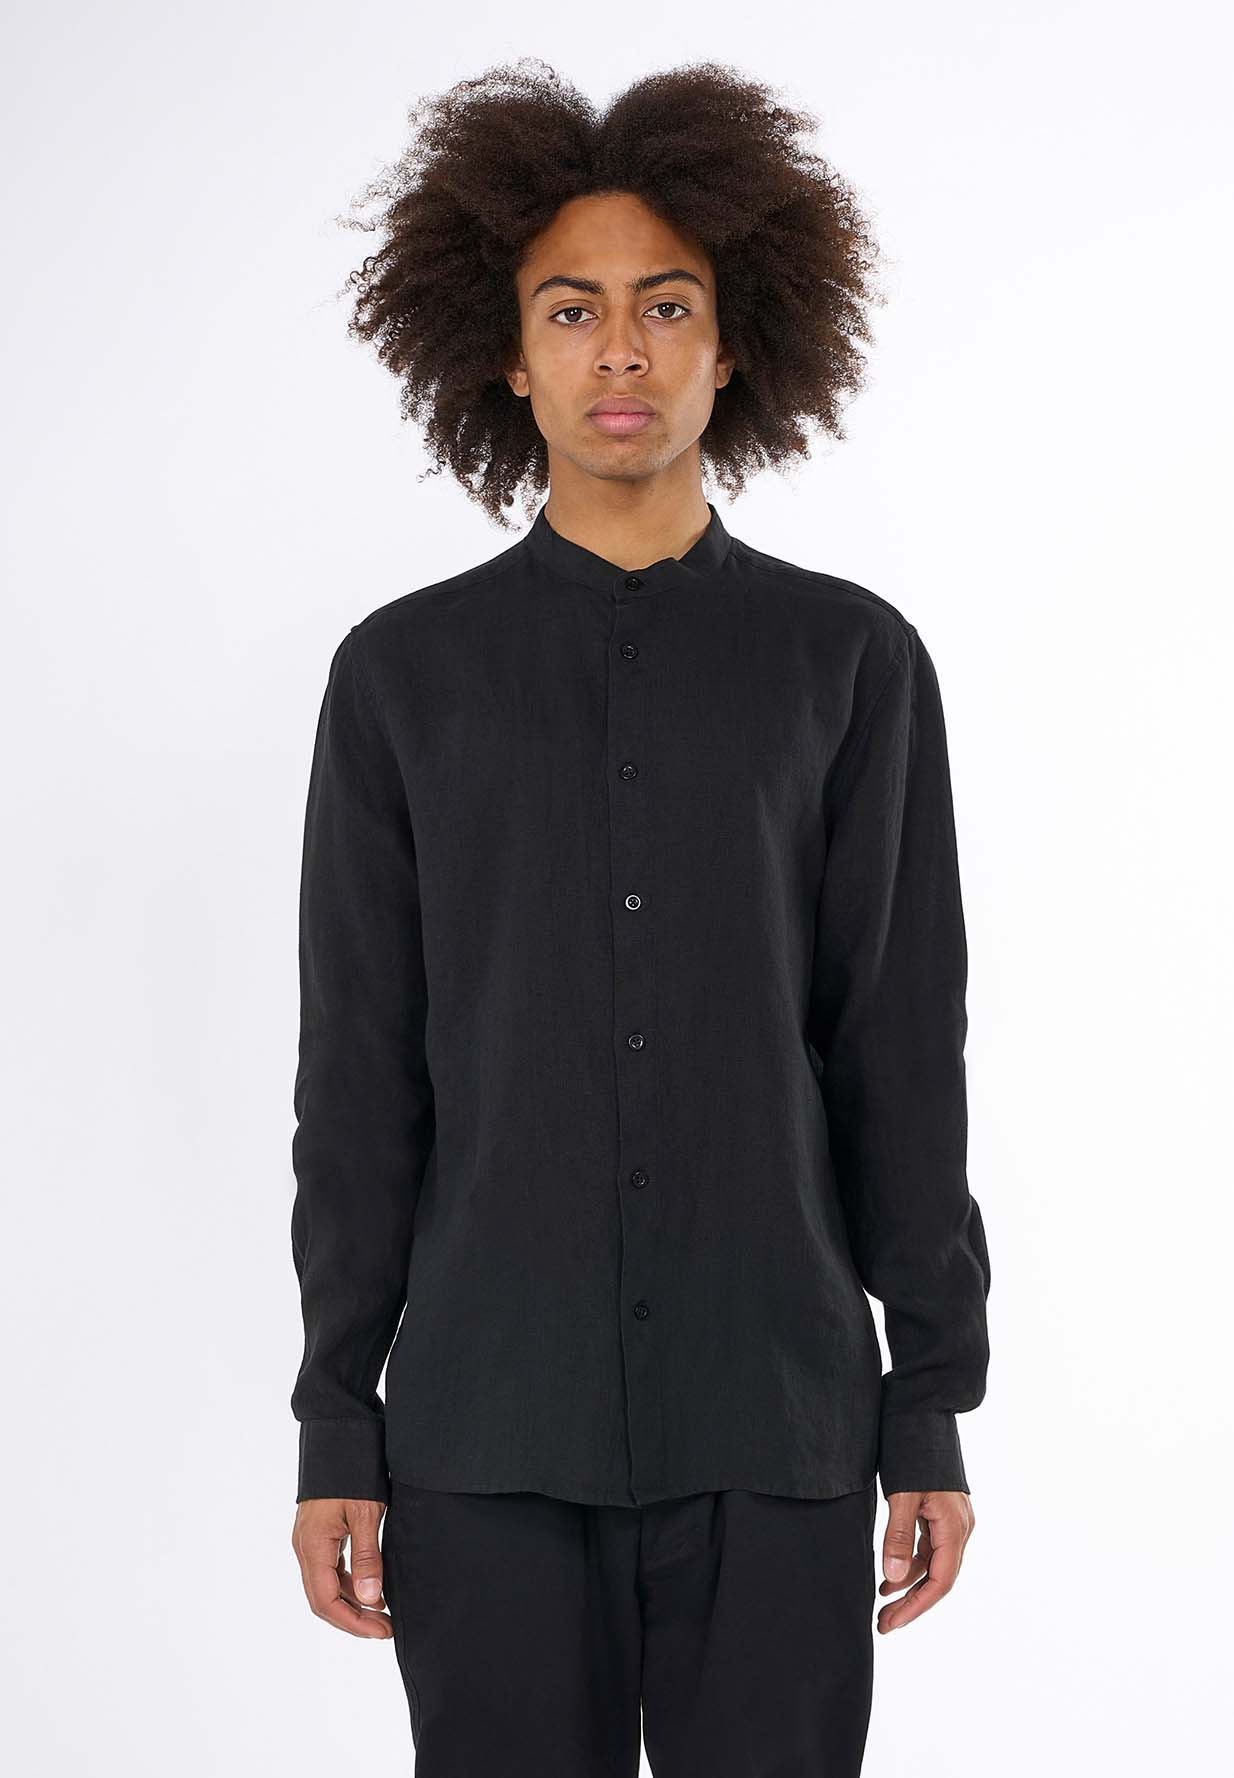 KNOWLEDGECOTTON APPAREL Custom Fit Linen Stand Collar Shirt black jet L